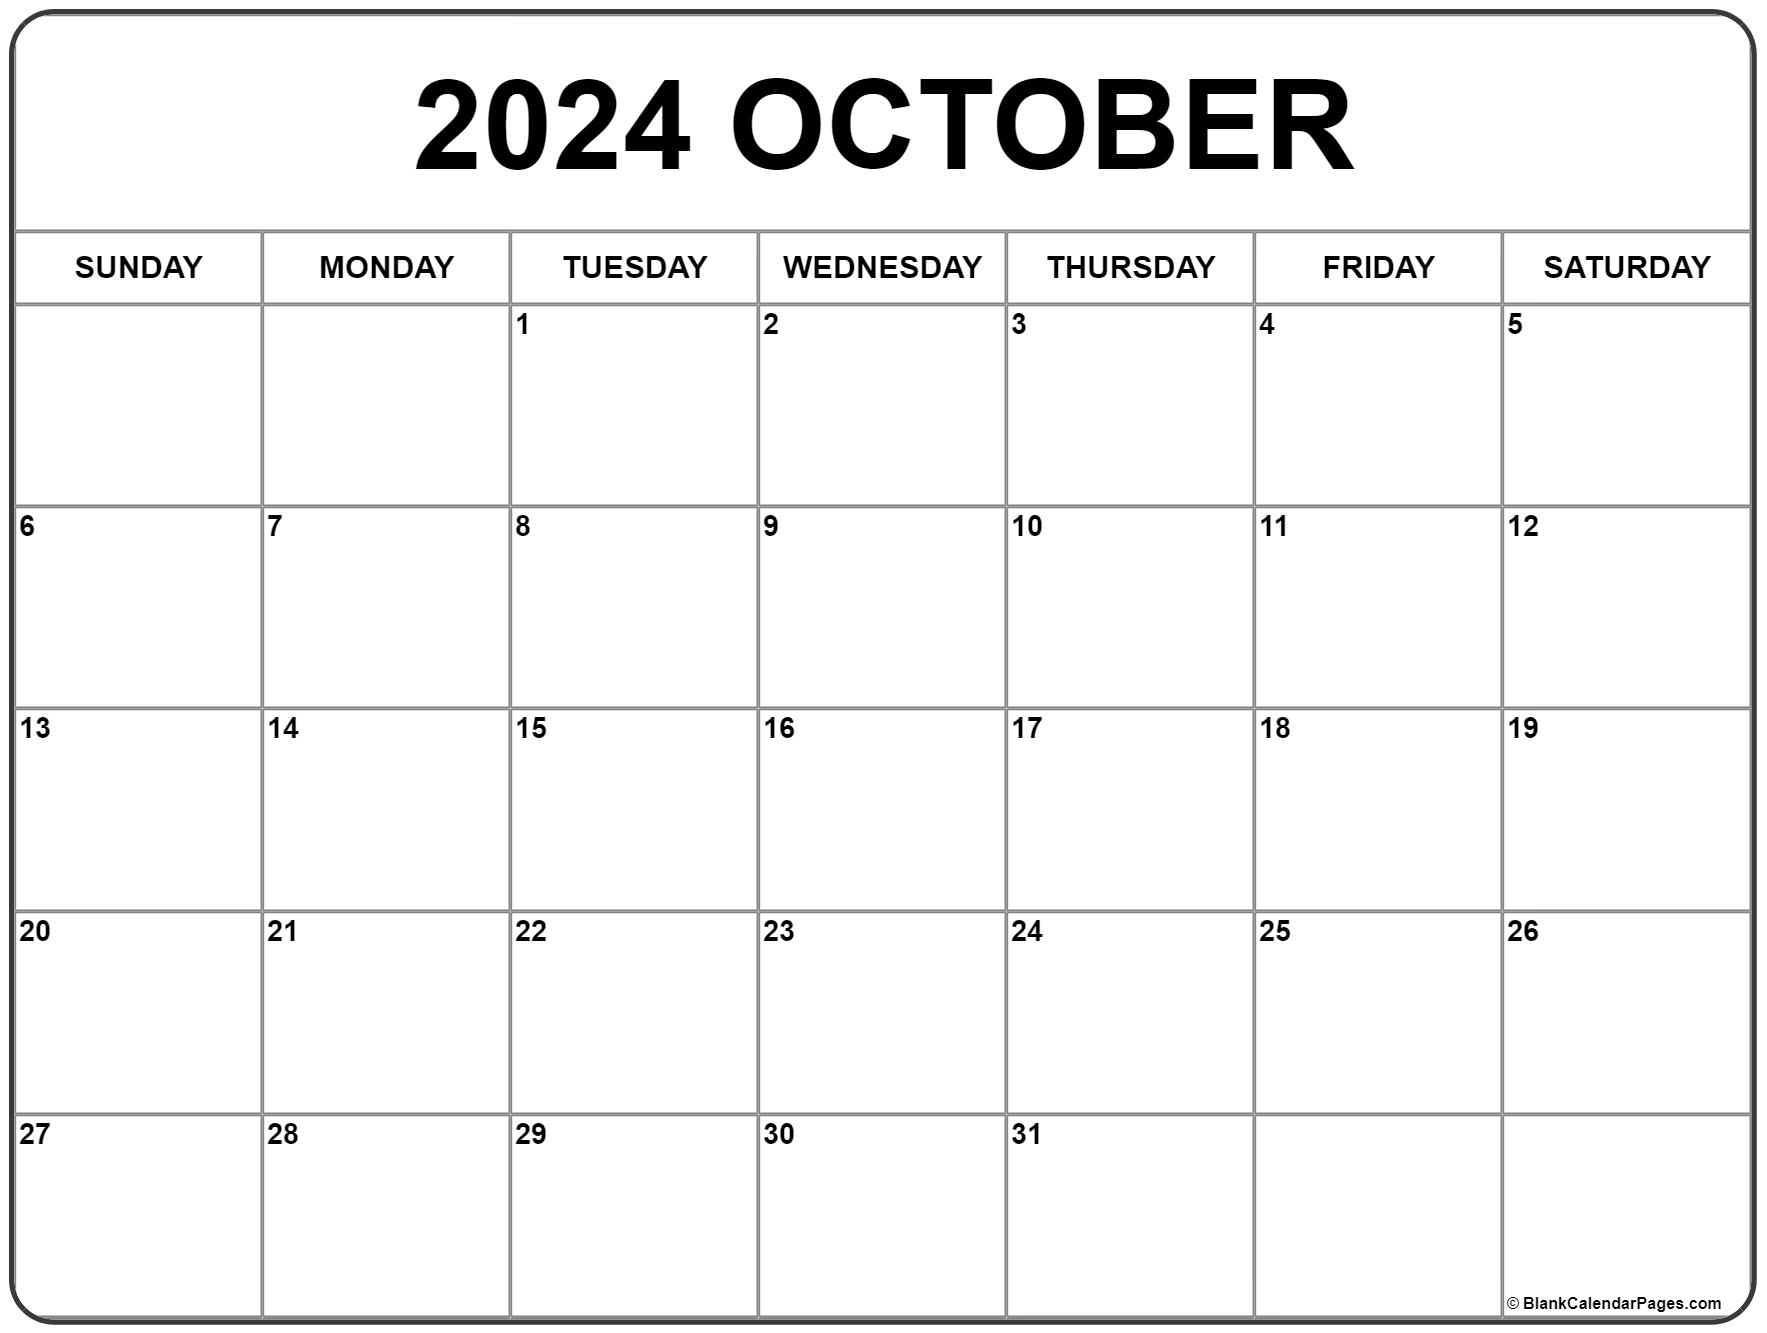 october-2018-calendar-free-printable-monthly-calendars